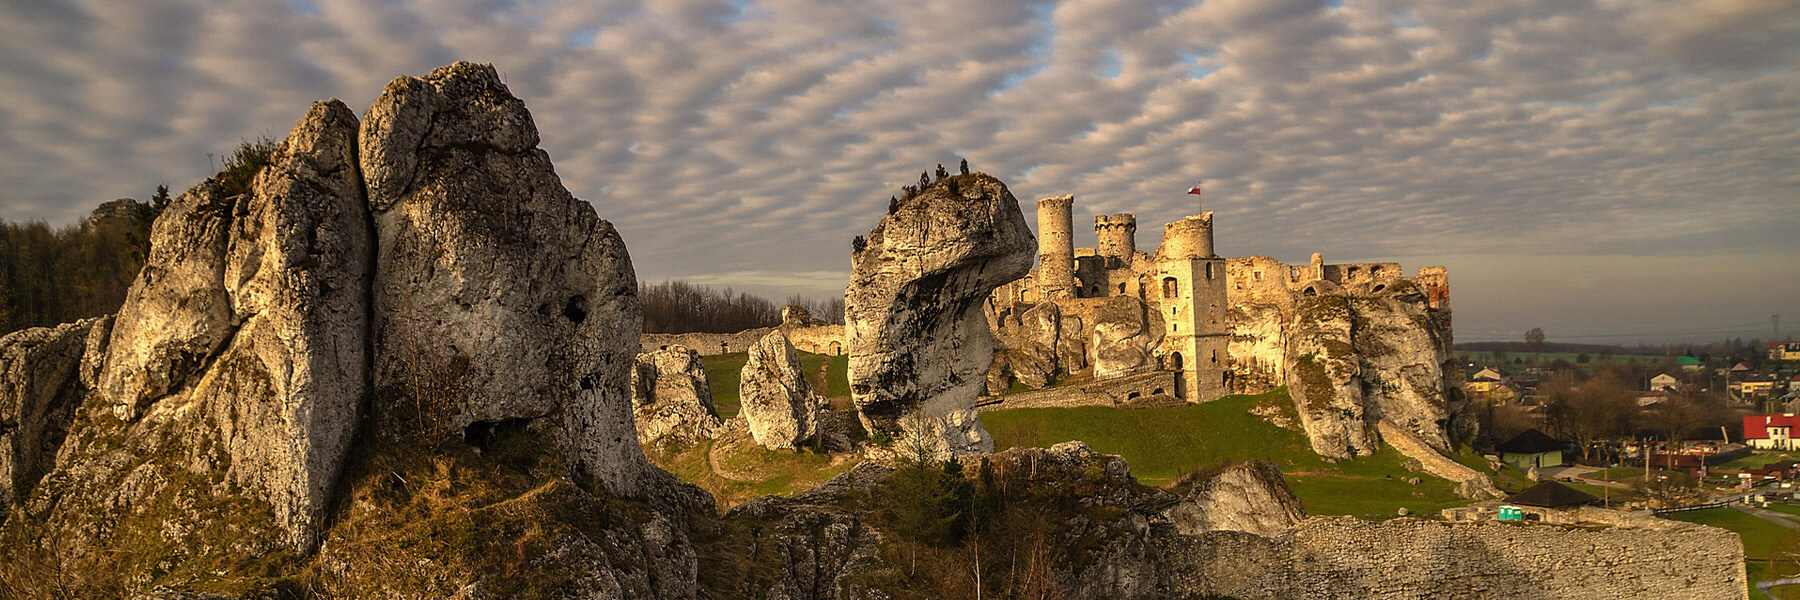 Ogrodzieniec Castle in Poland